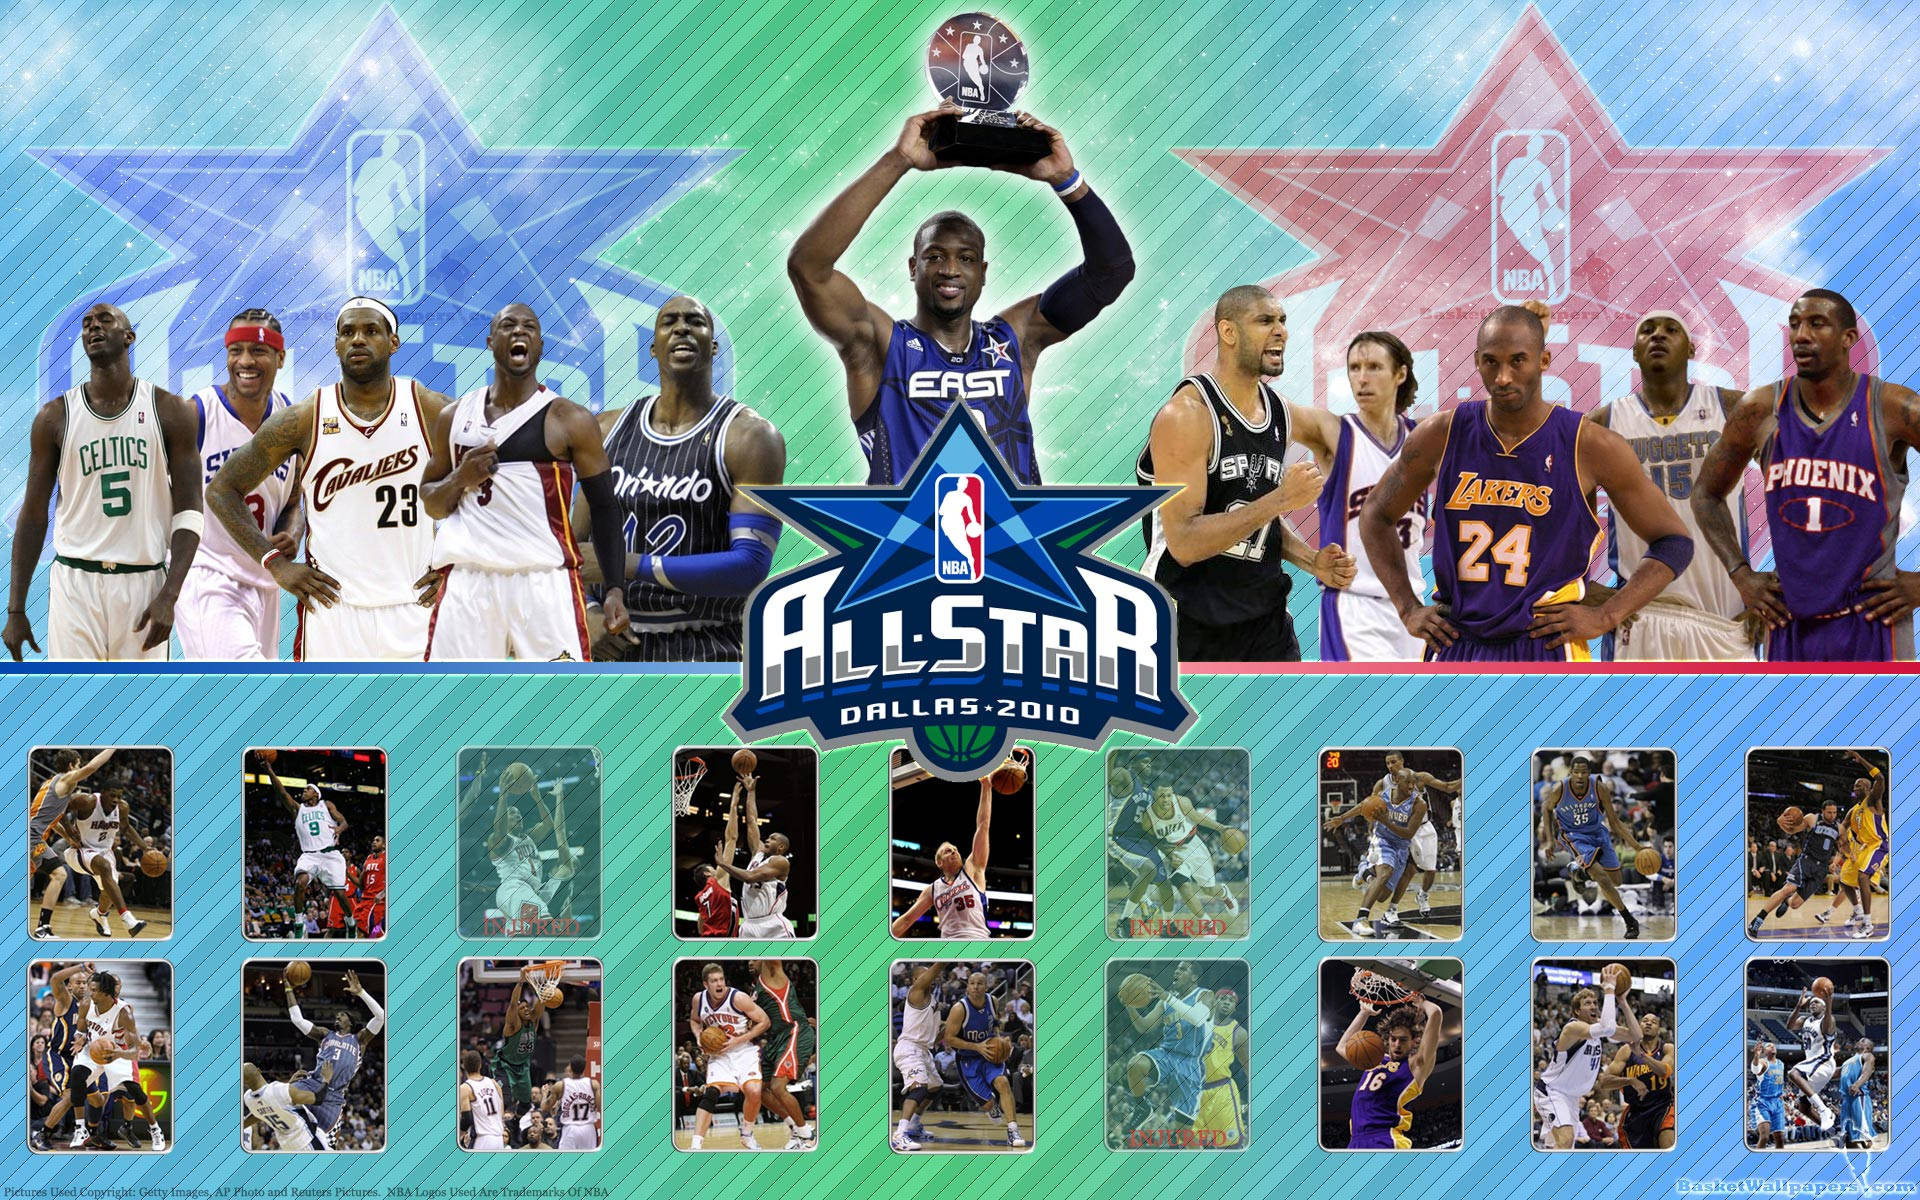 All-star Dallas Basketball Team